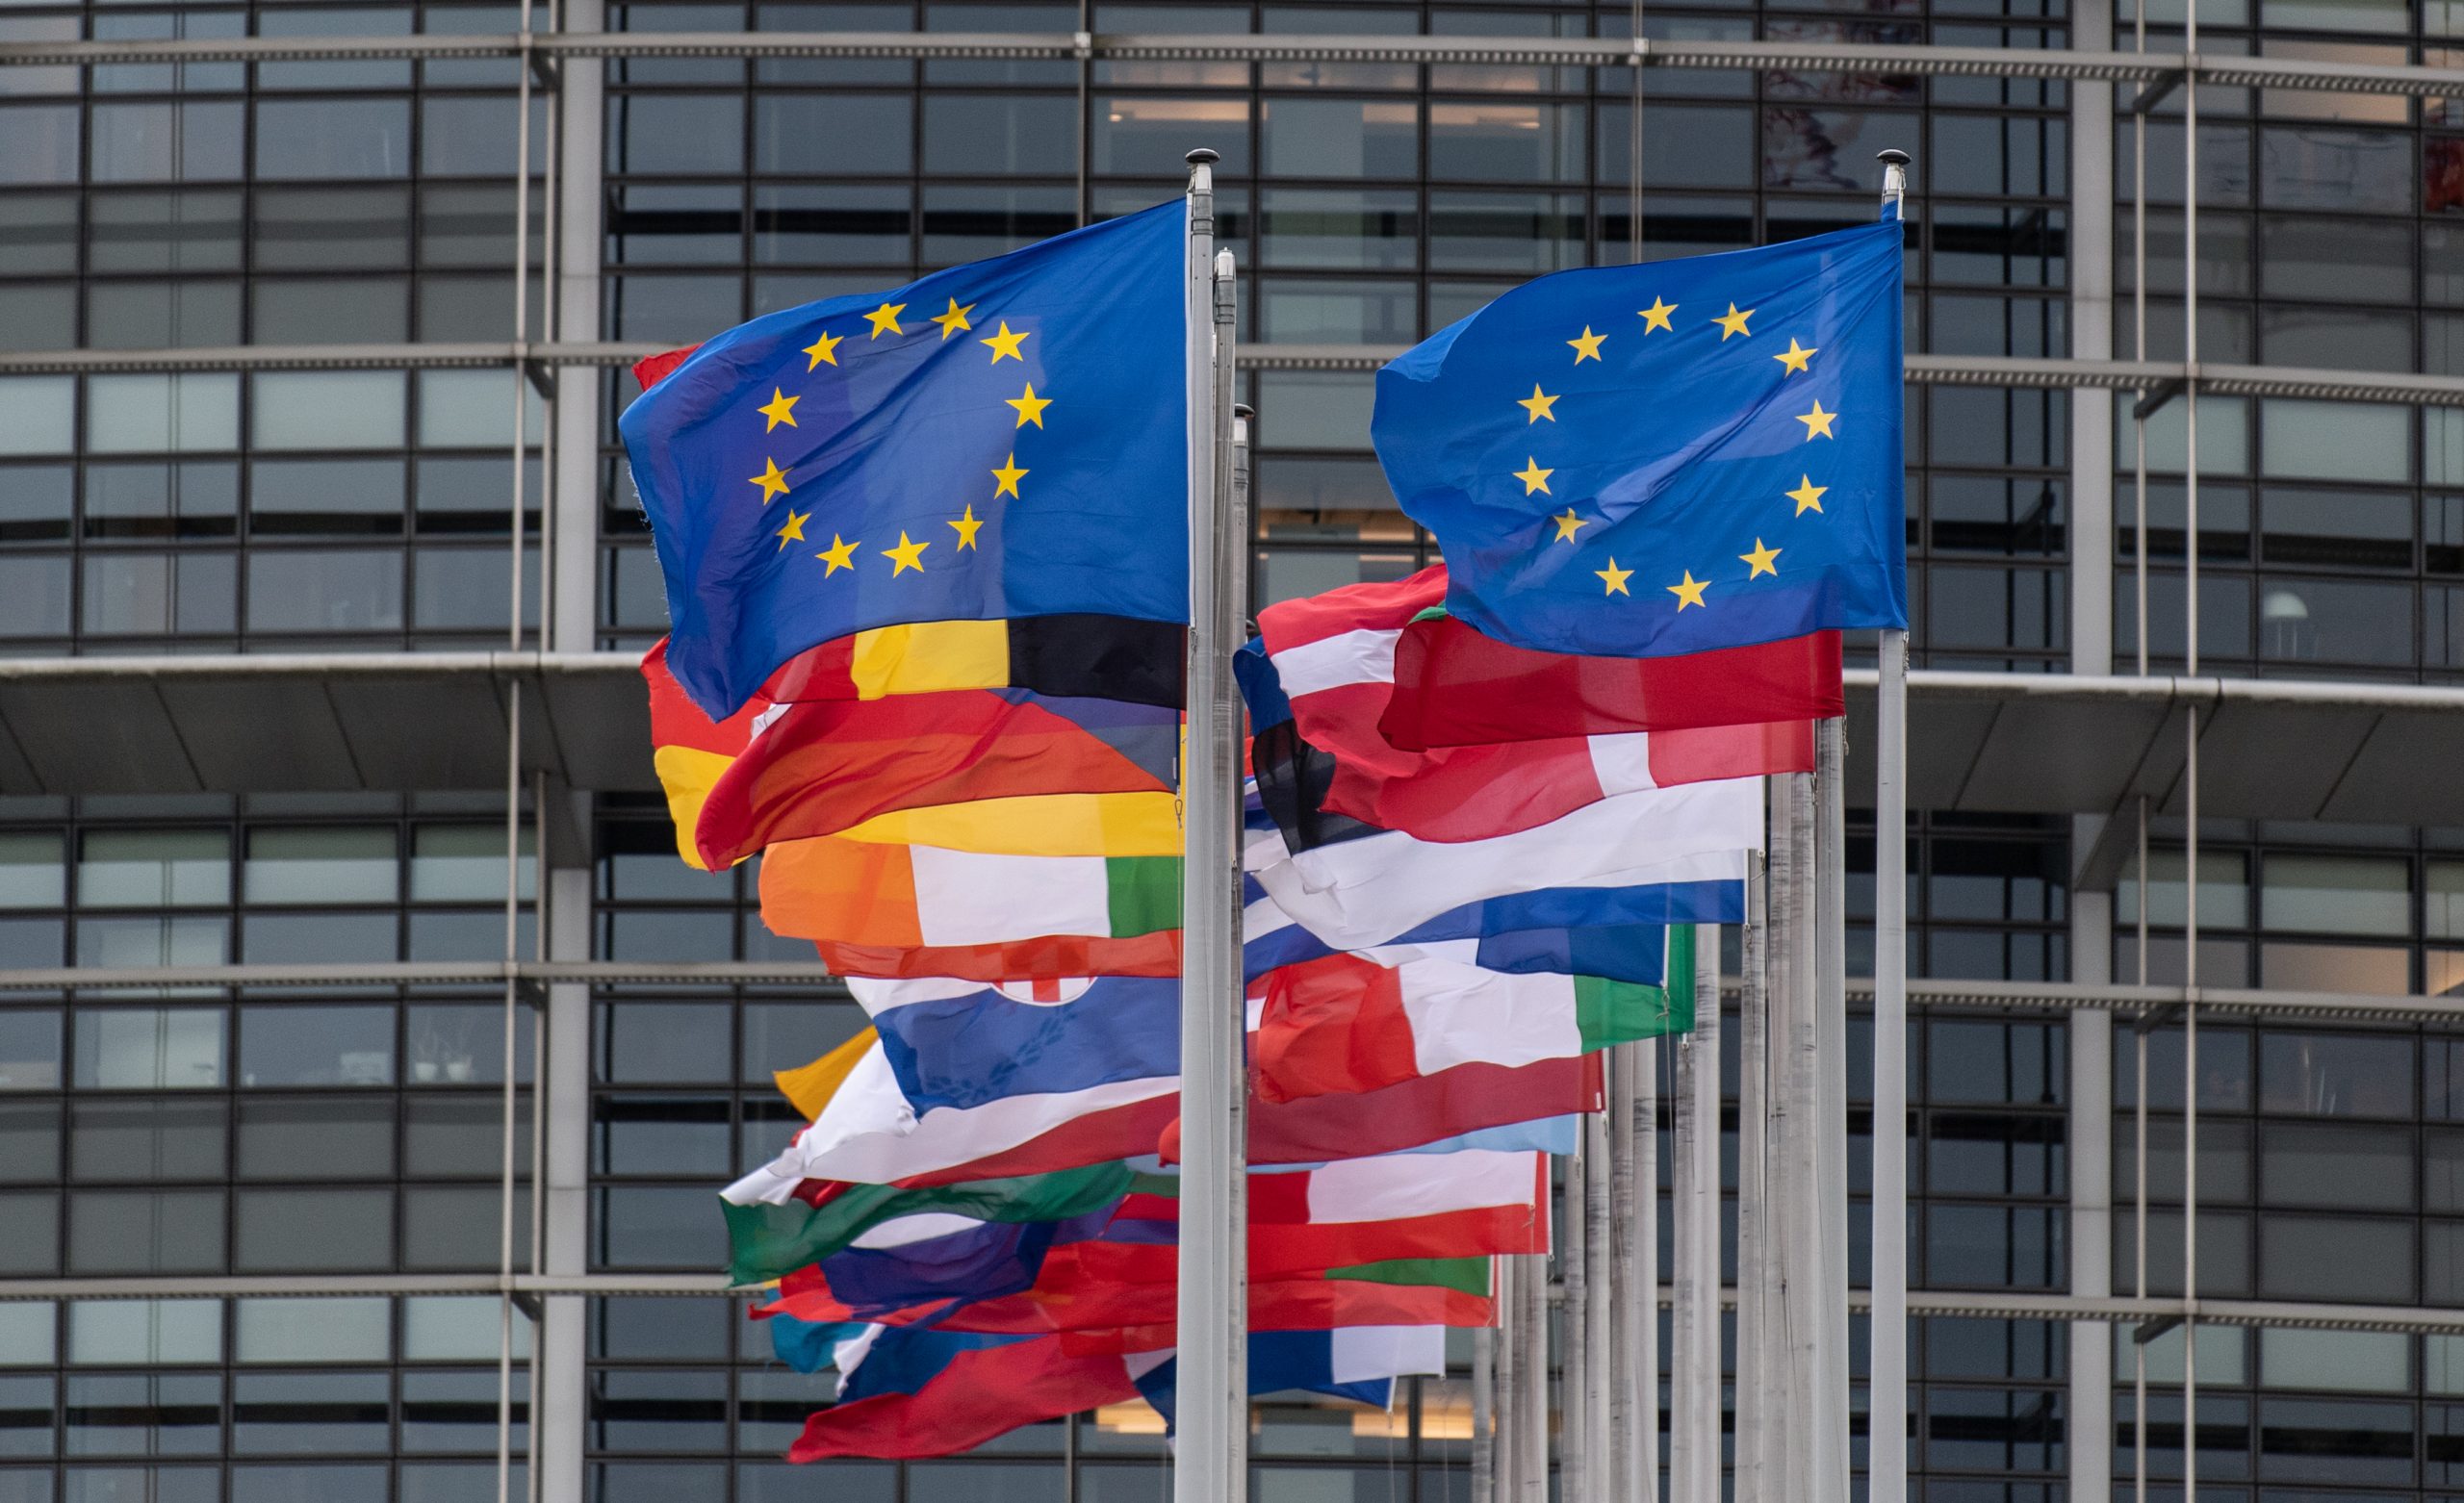 parlamento europeo bandiere europee bandiere europee d'europa